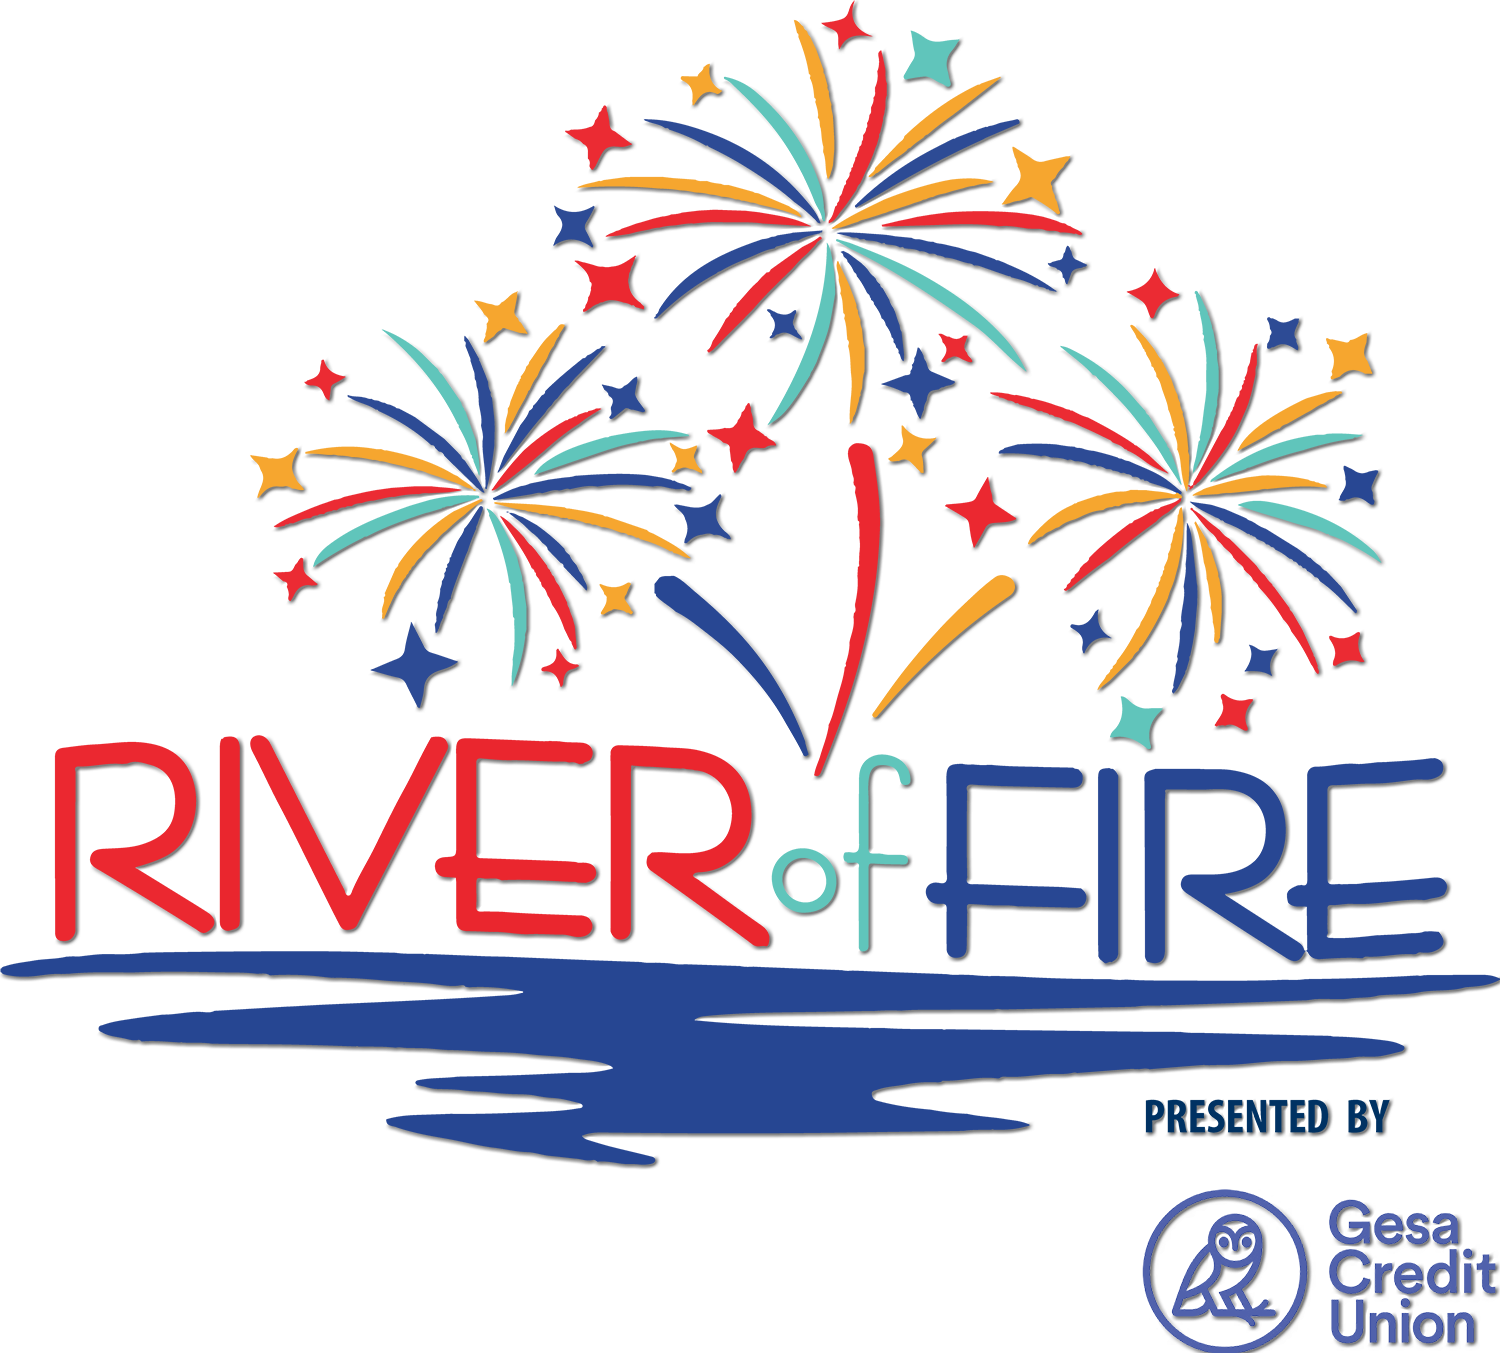 River of Fire Festival